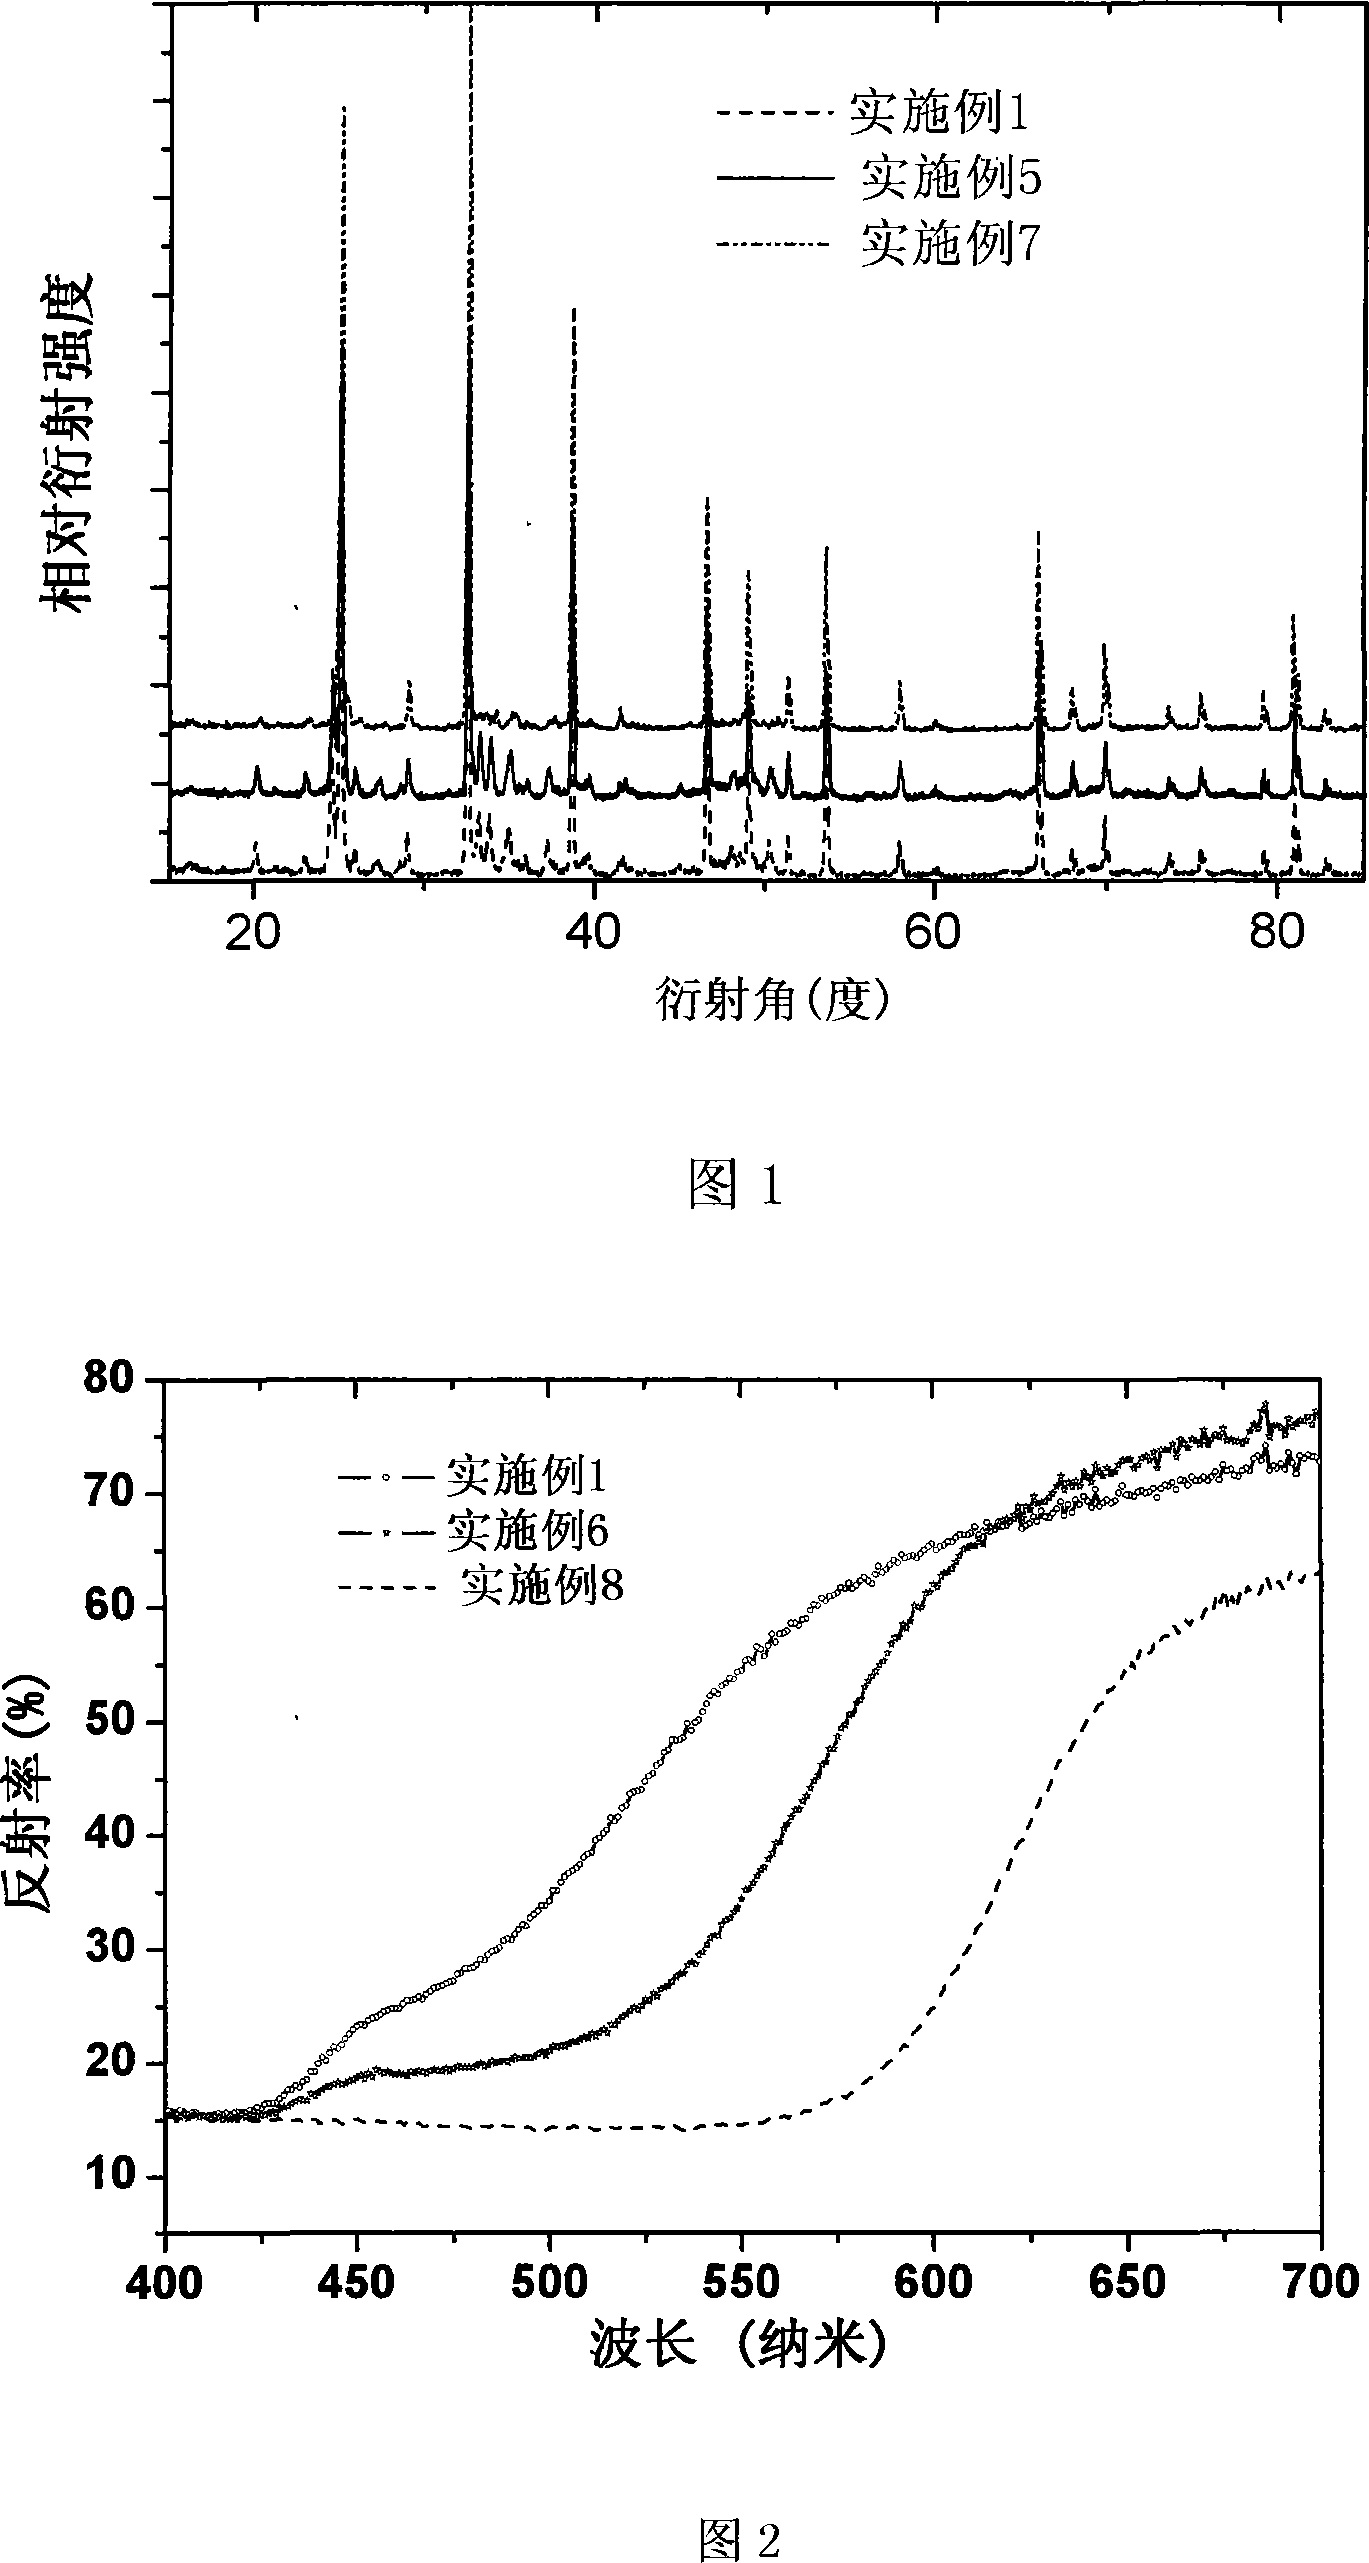 Tin-doped (IV) sulfide lanthanum pigment and preparation method thereof